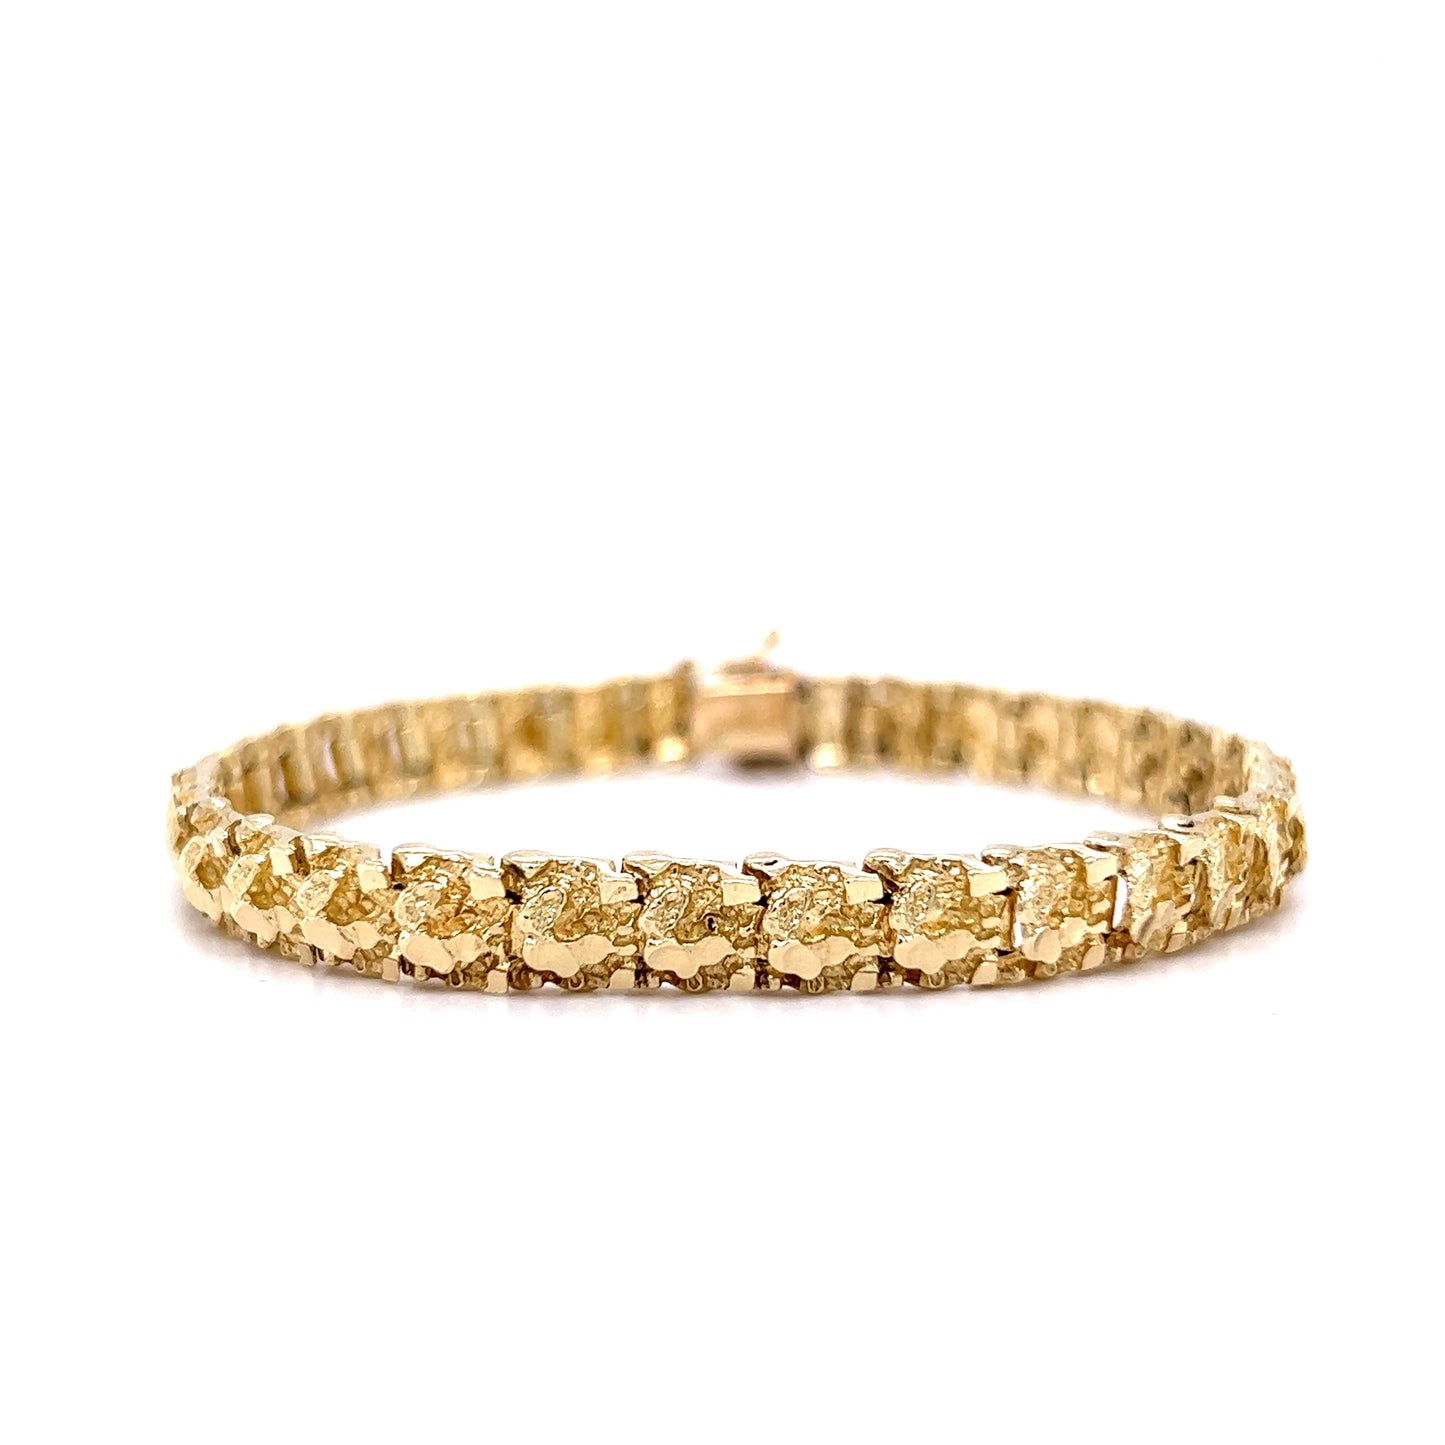 Gold Nugget Bracelet in 14k & 24k Yellow Gold